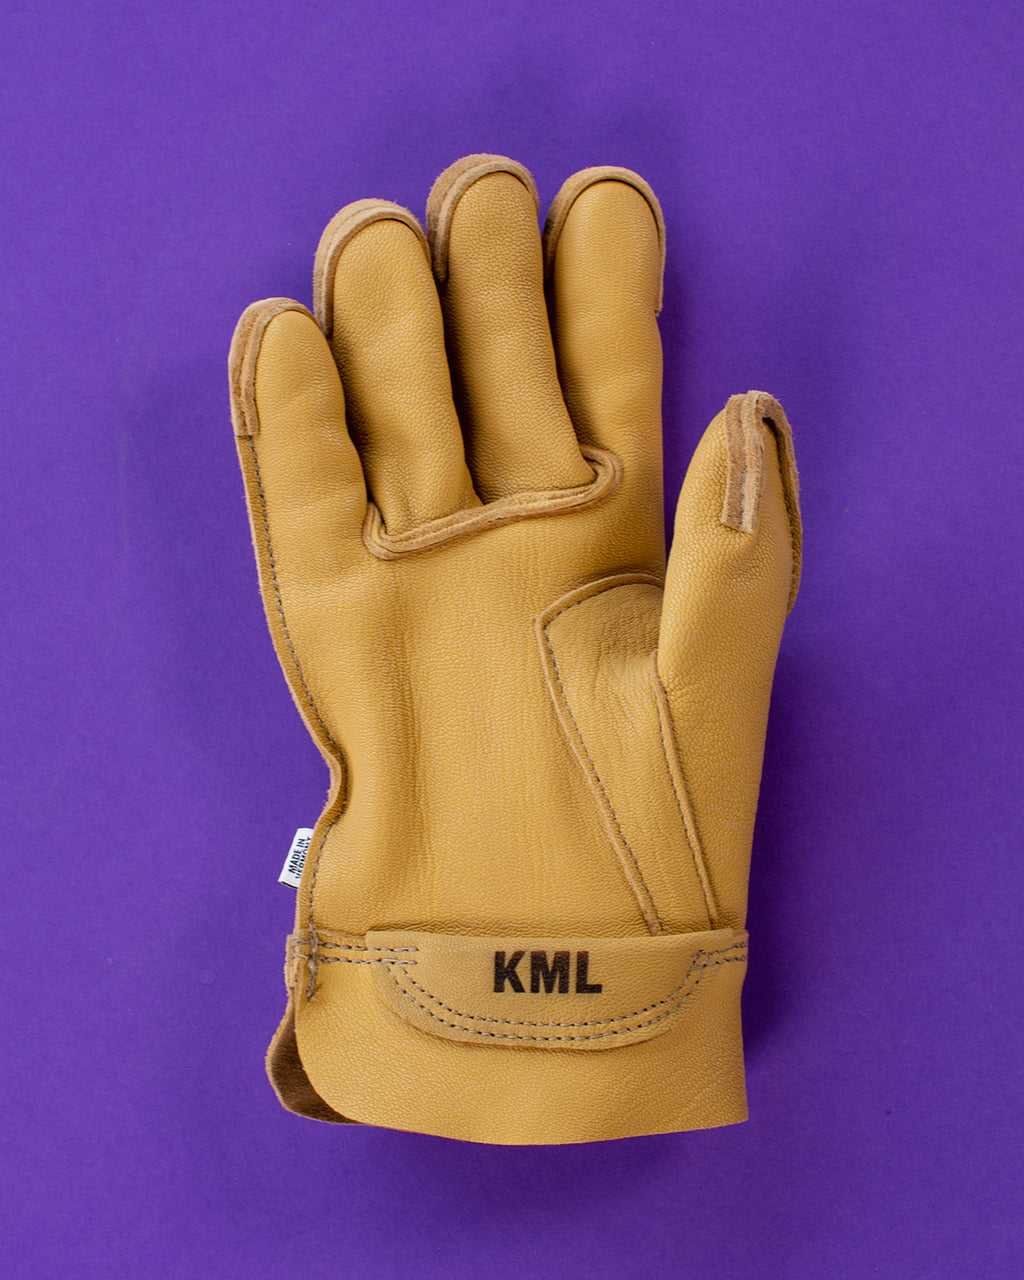 Premium Photo  Men's hands in medical gloves hold an envelope